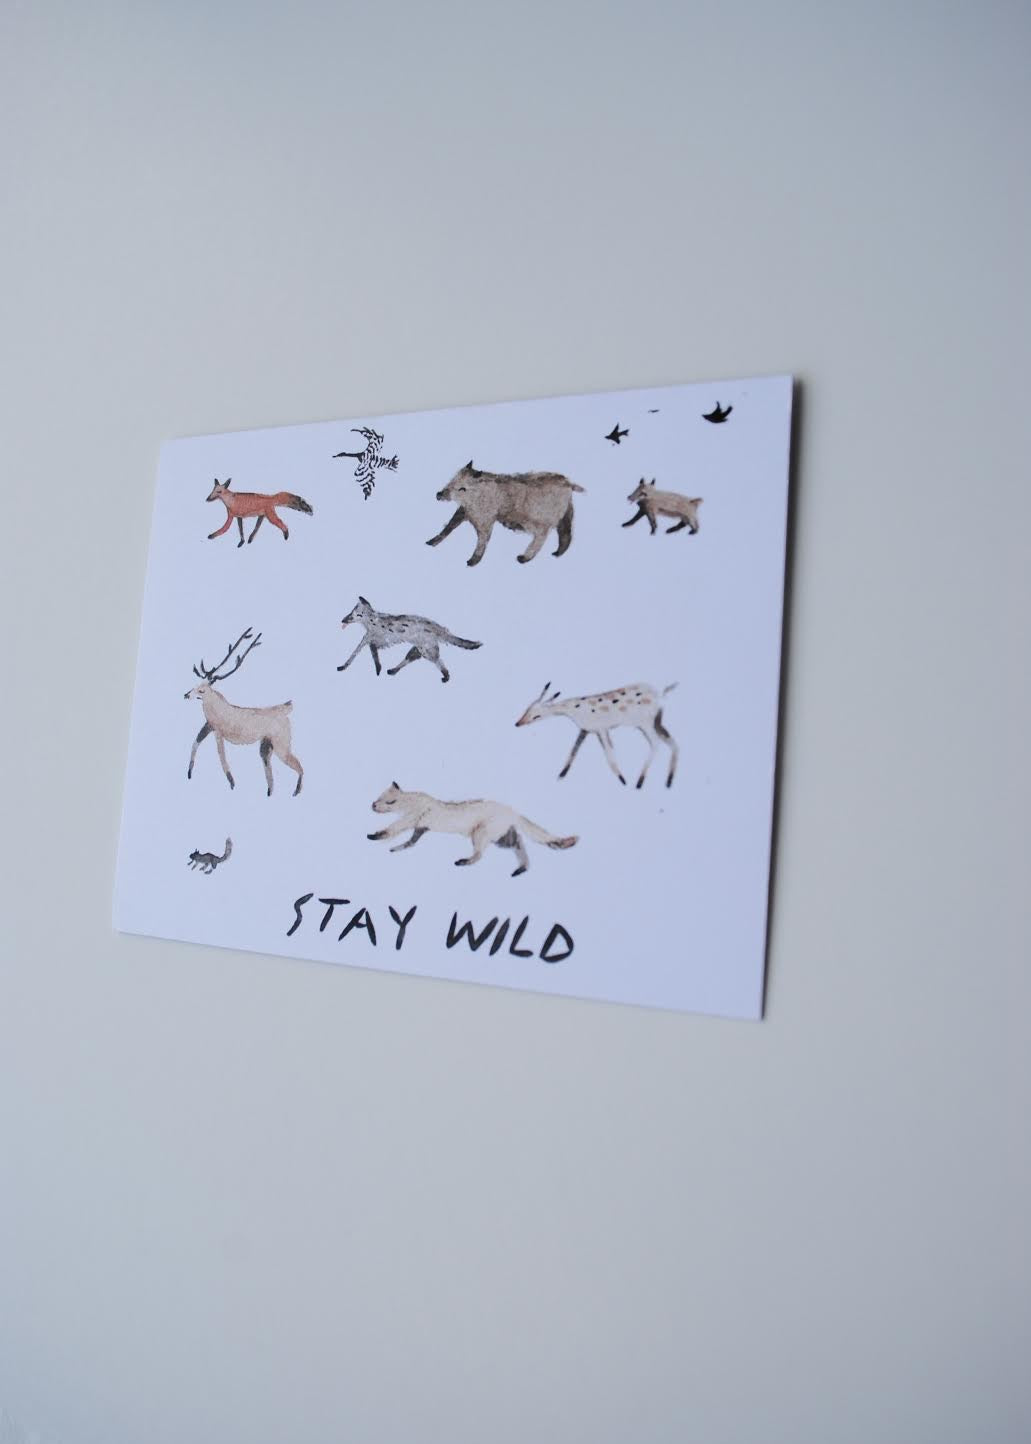 Stay Wild Card by Sarah Burwash